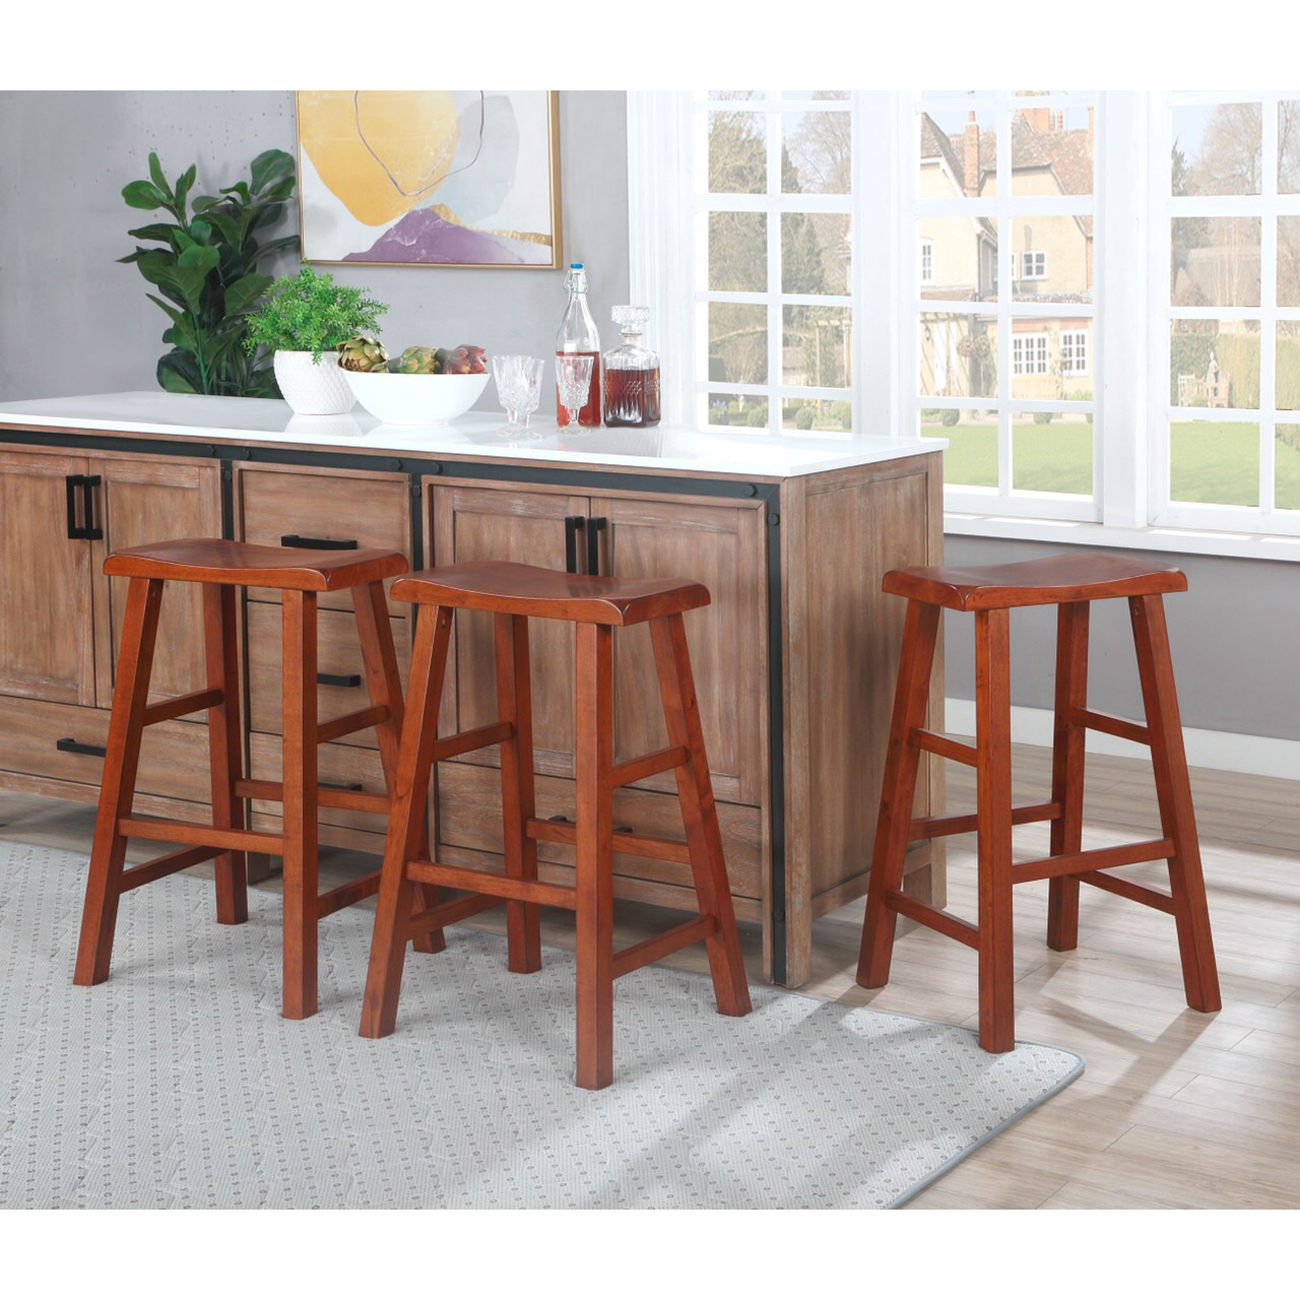 eHemco Heavy-Duty Solid Wood Saddle Seat Kitchen Counter Barstools, 29 Inches, Dark Oak, Set of 3 - image 5 of 6